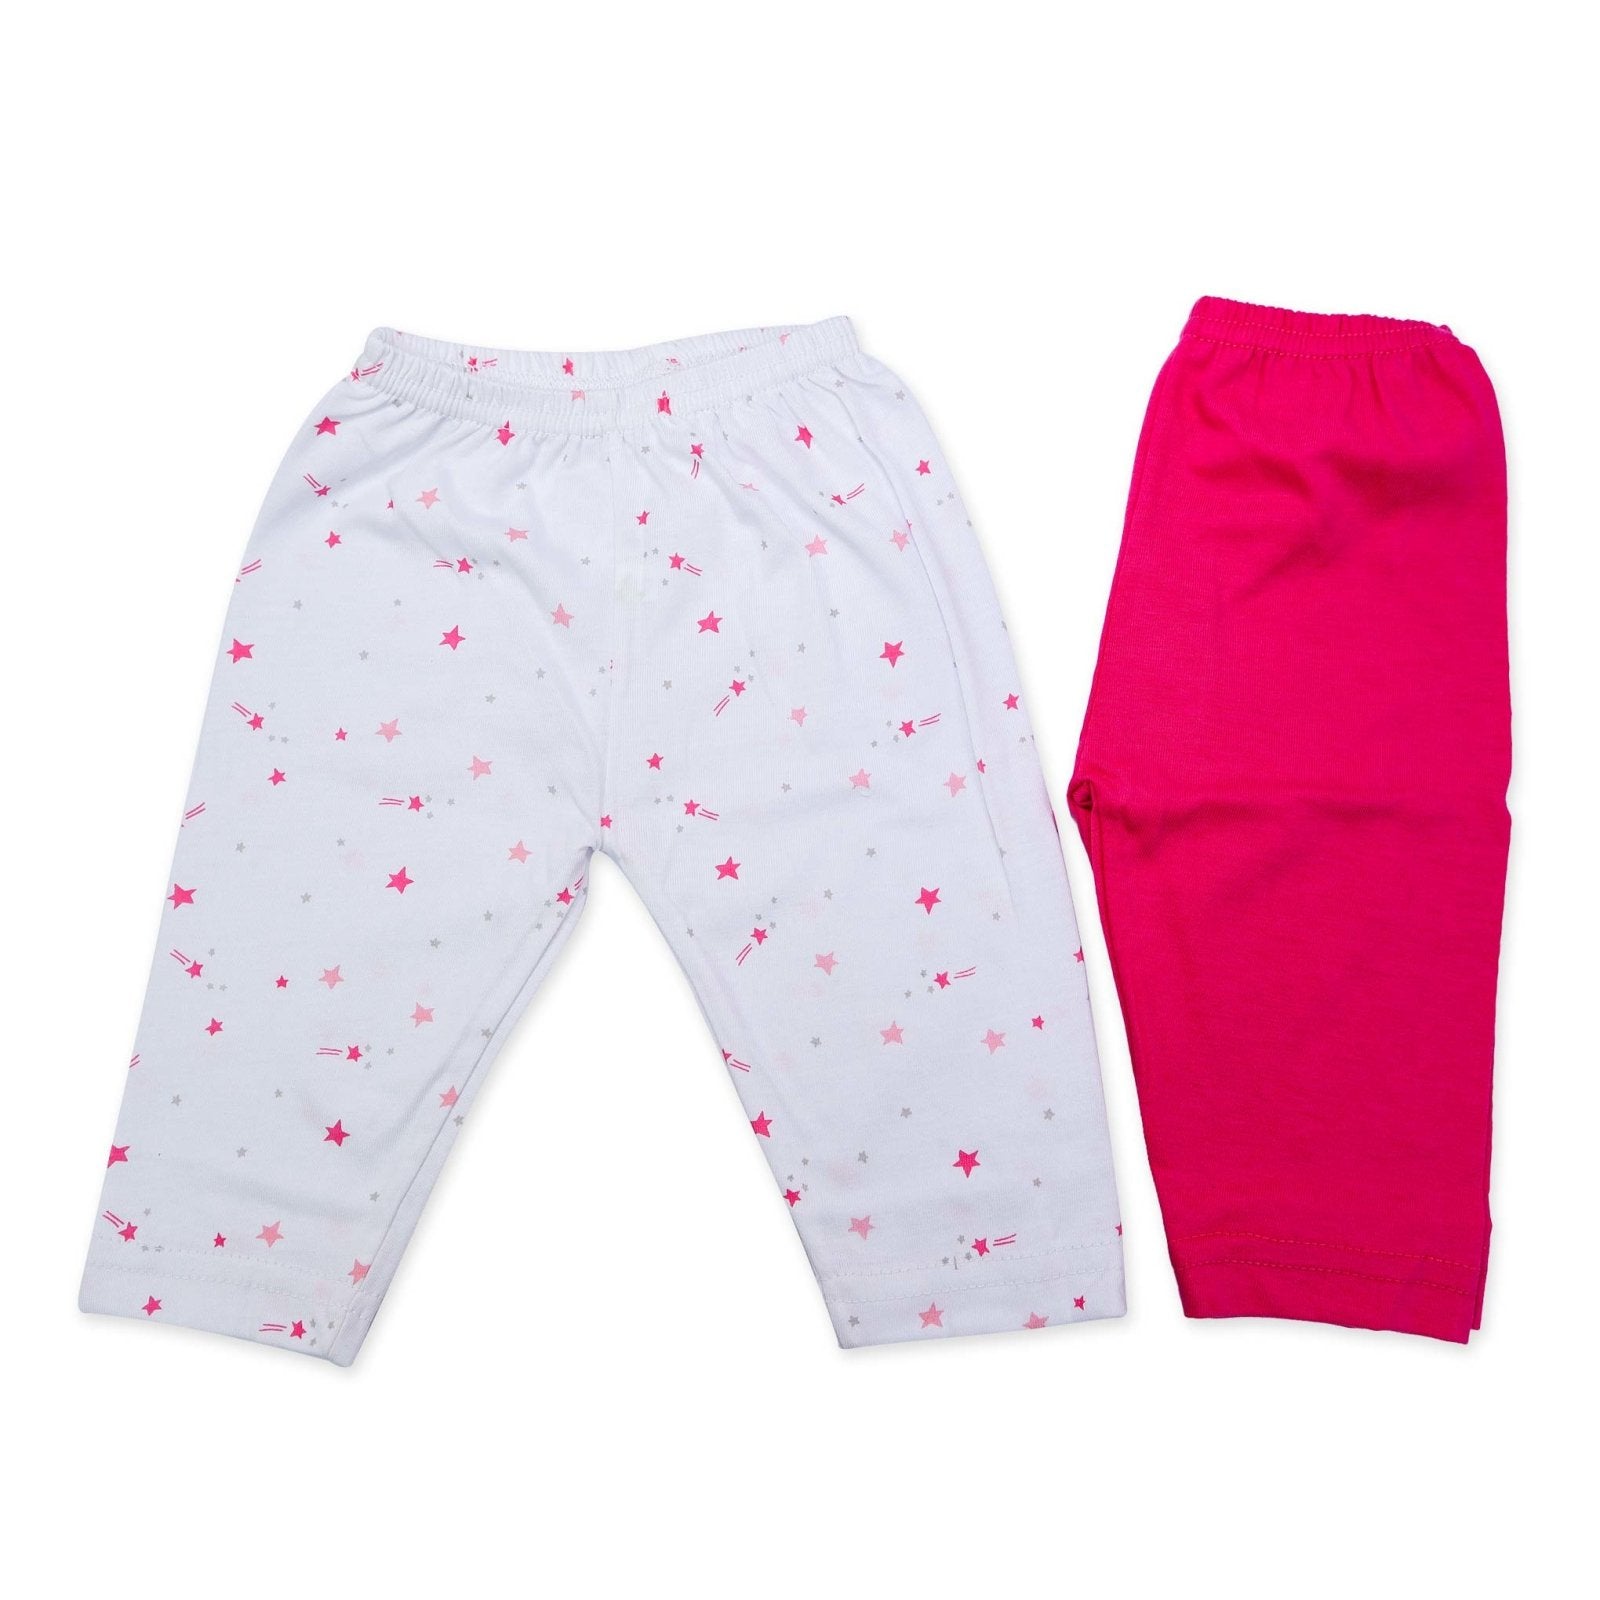 Pajama Set of 2 Pink Star Printed by Little Darling